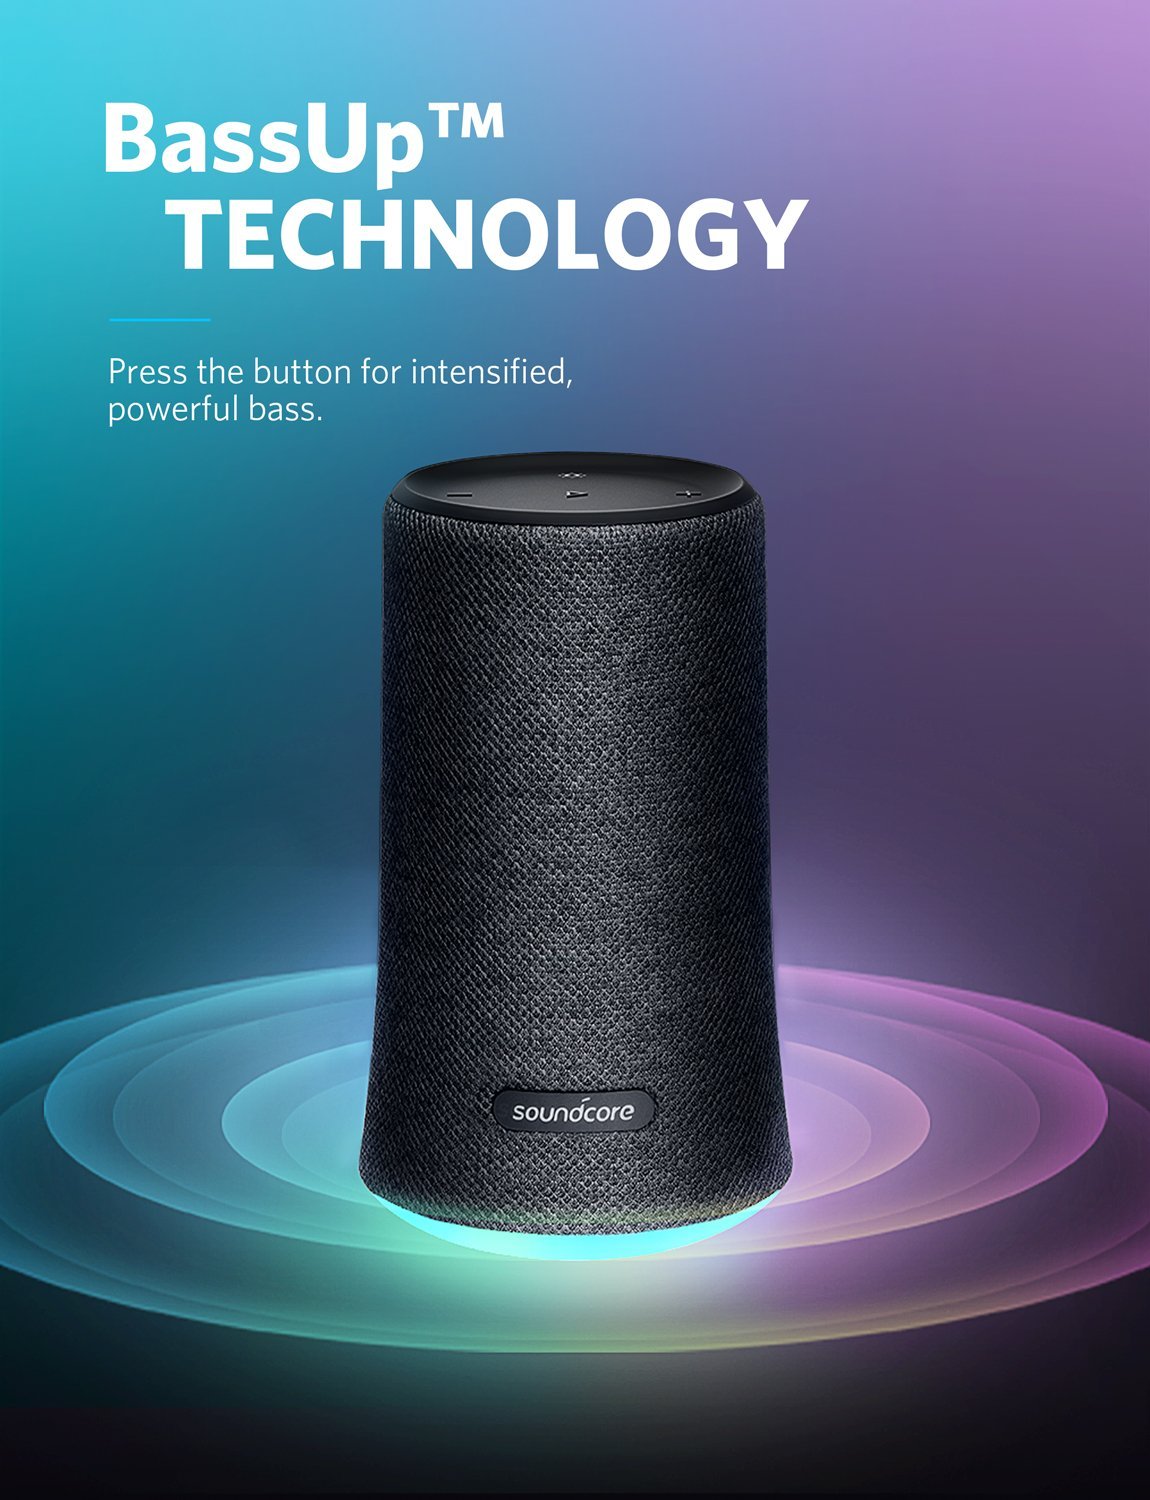 Anker Bluetooth Speaker and Headphones On Sale [Deal]